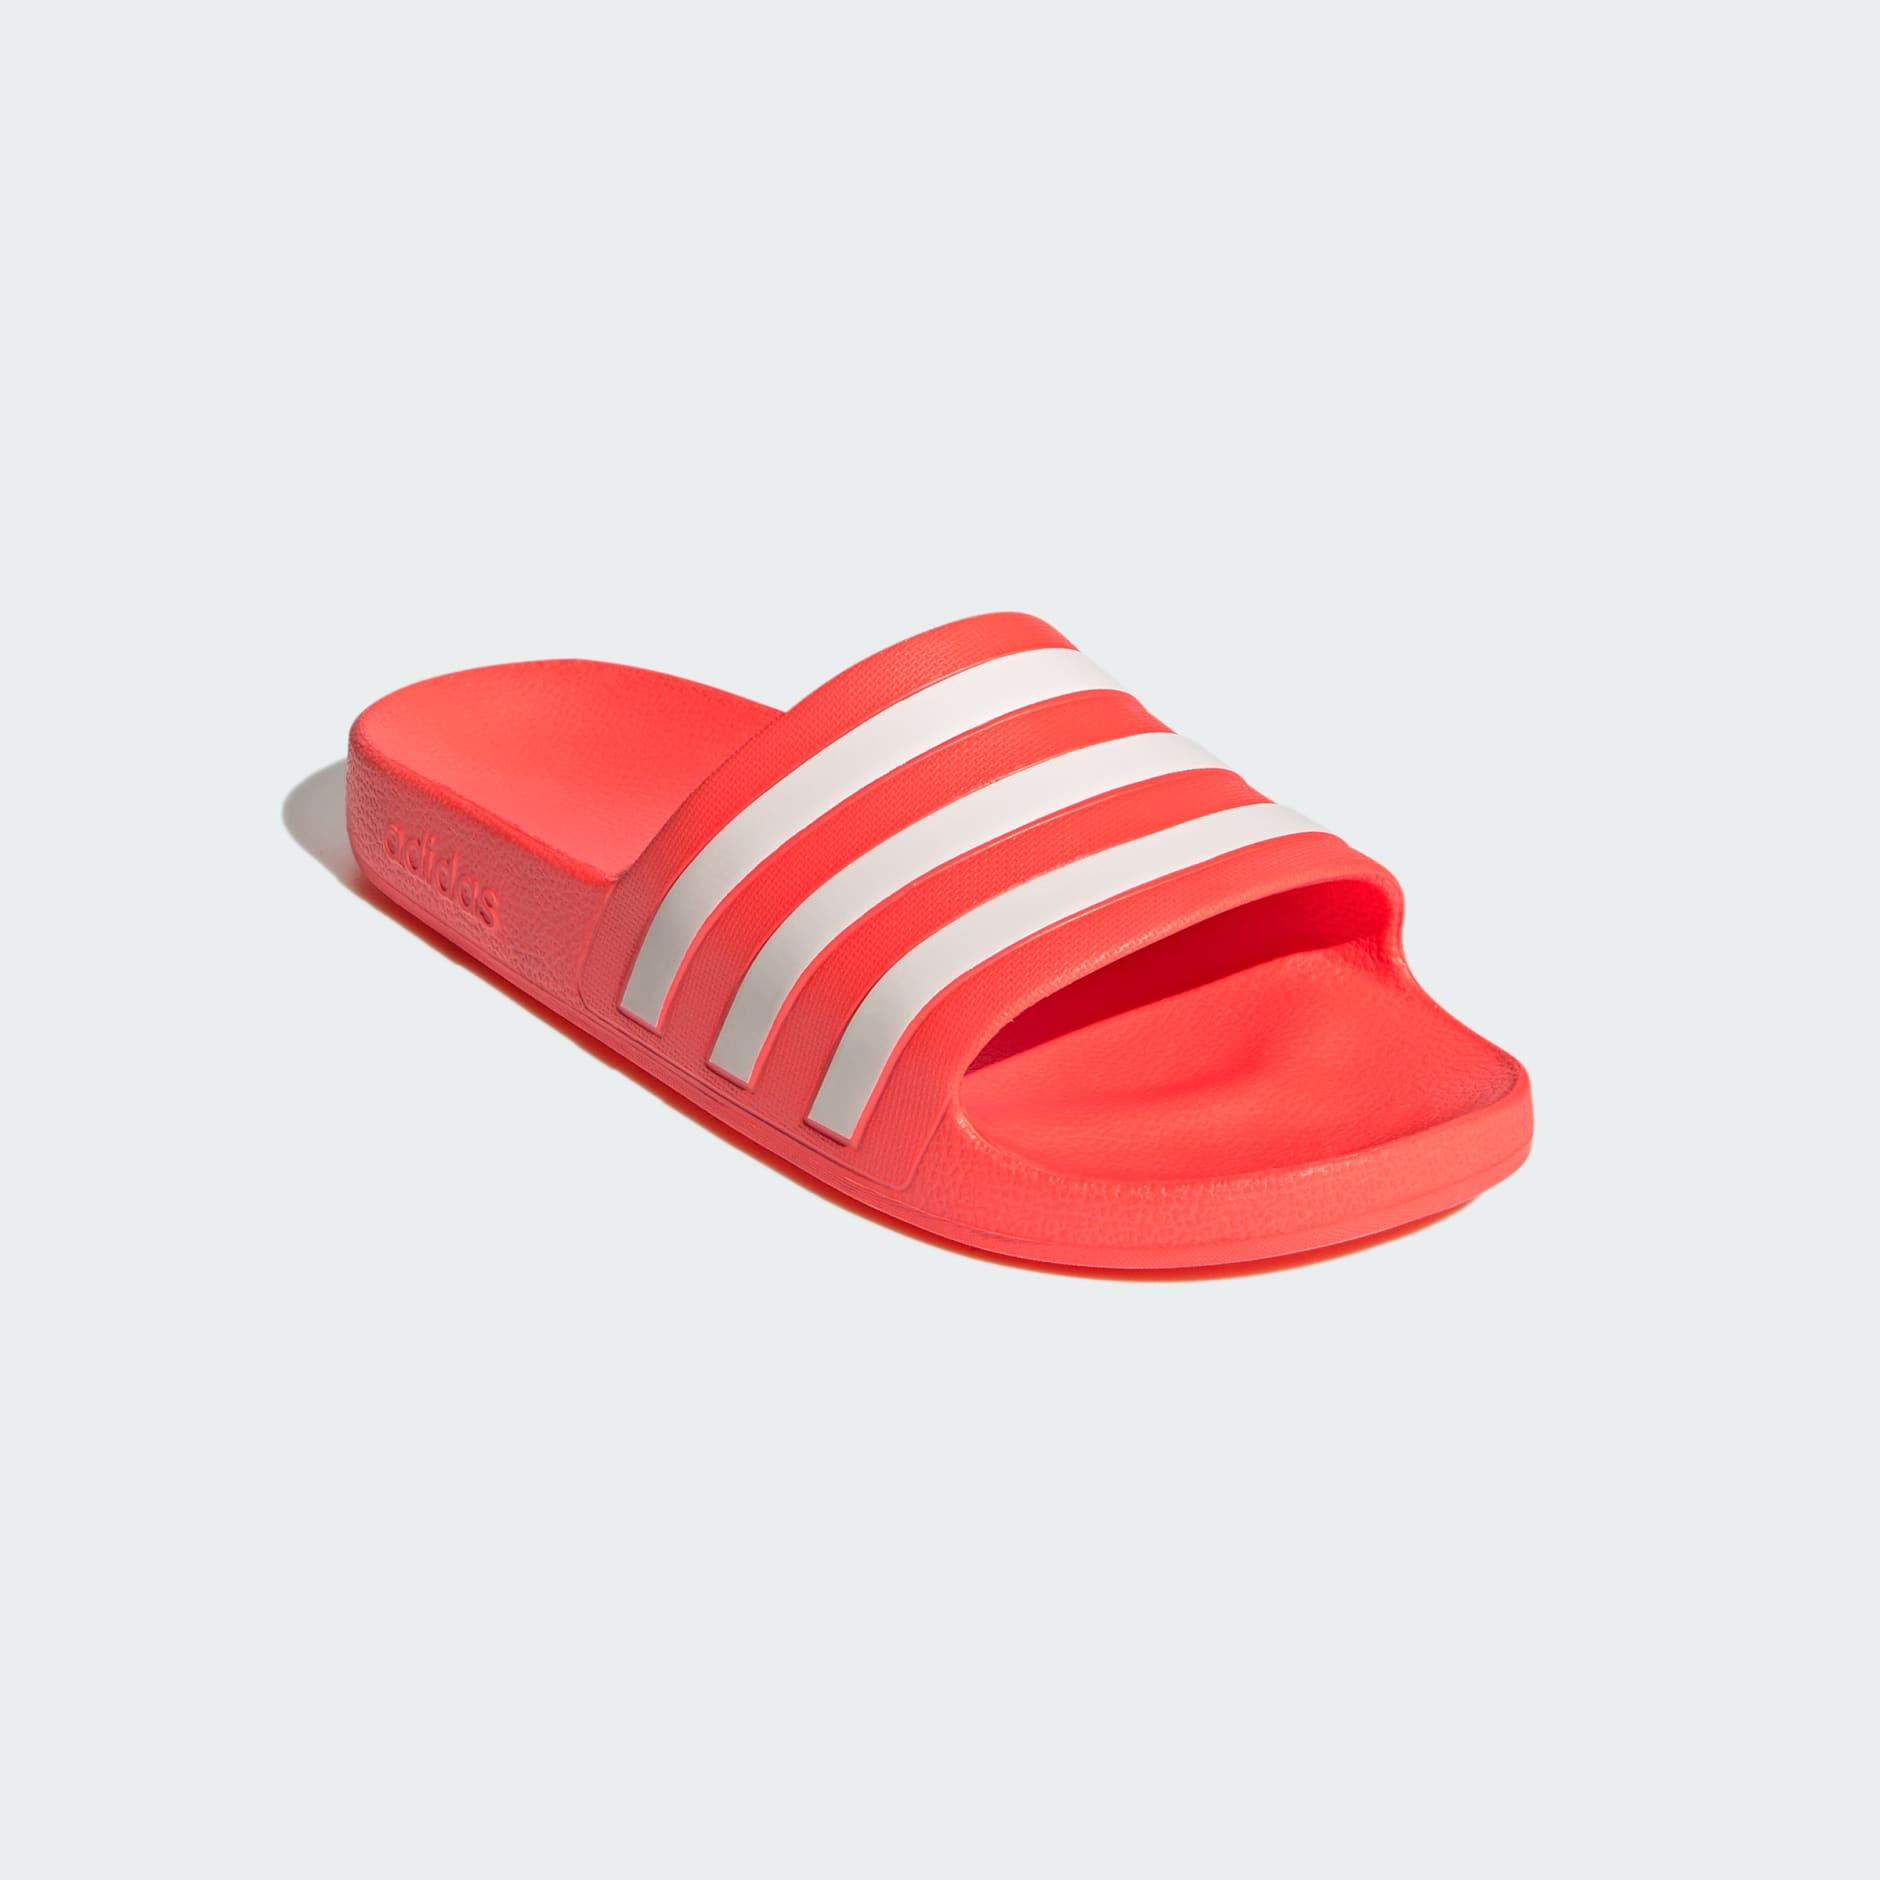 Shoes - Adilette Aqua Slides - Orange | adidas Qatar